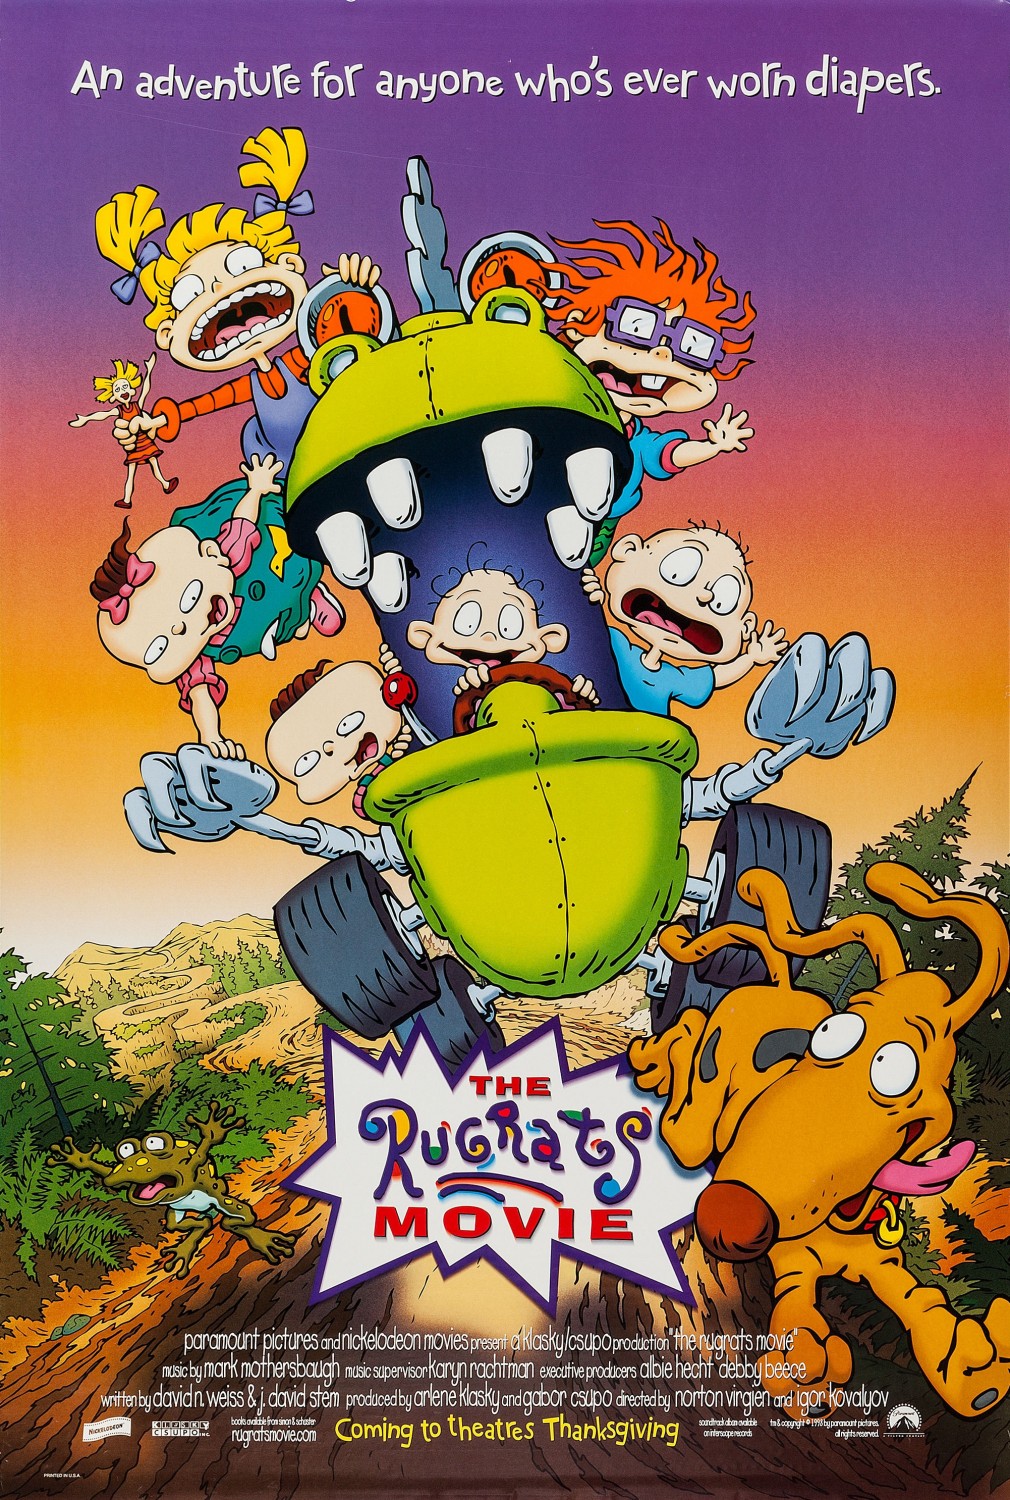 Cartoon Cartoon Summer Resort (2000) - MobyGames